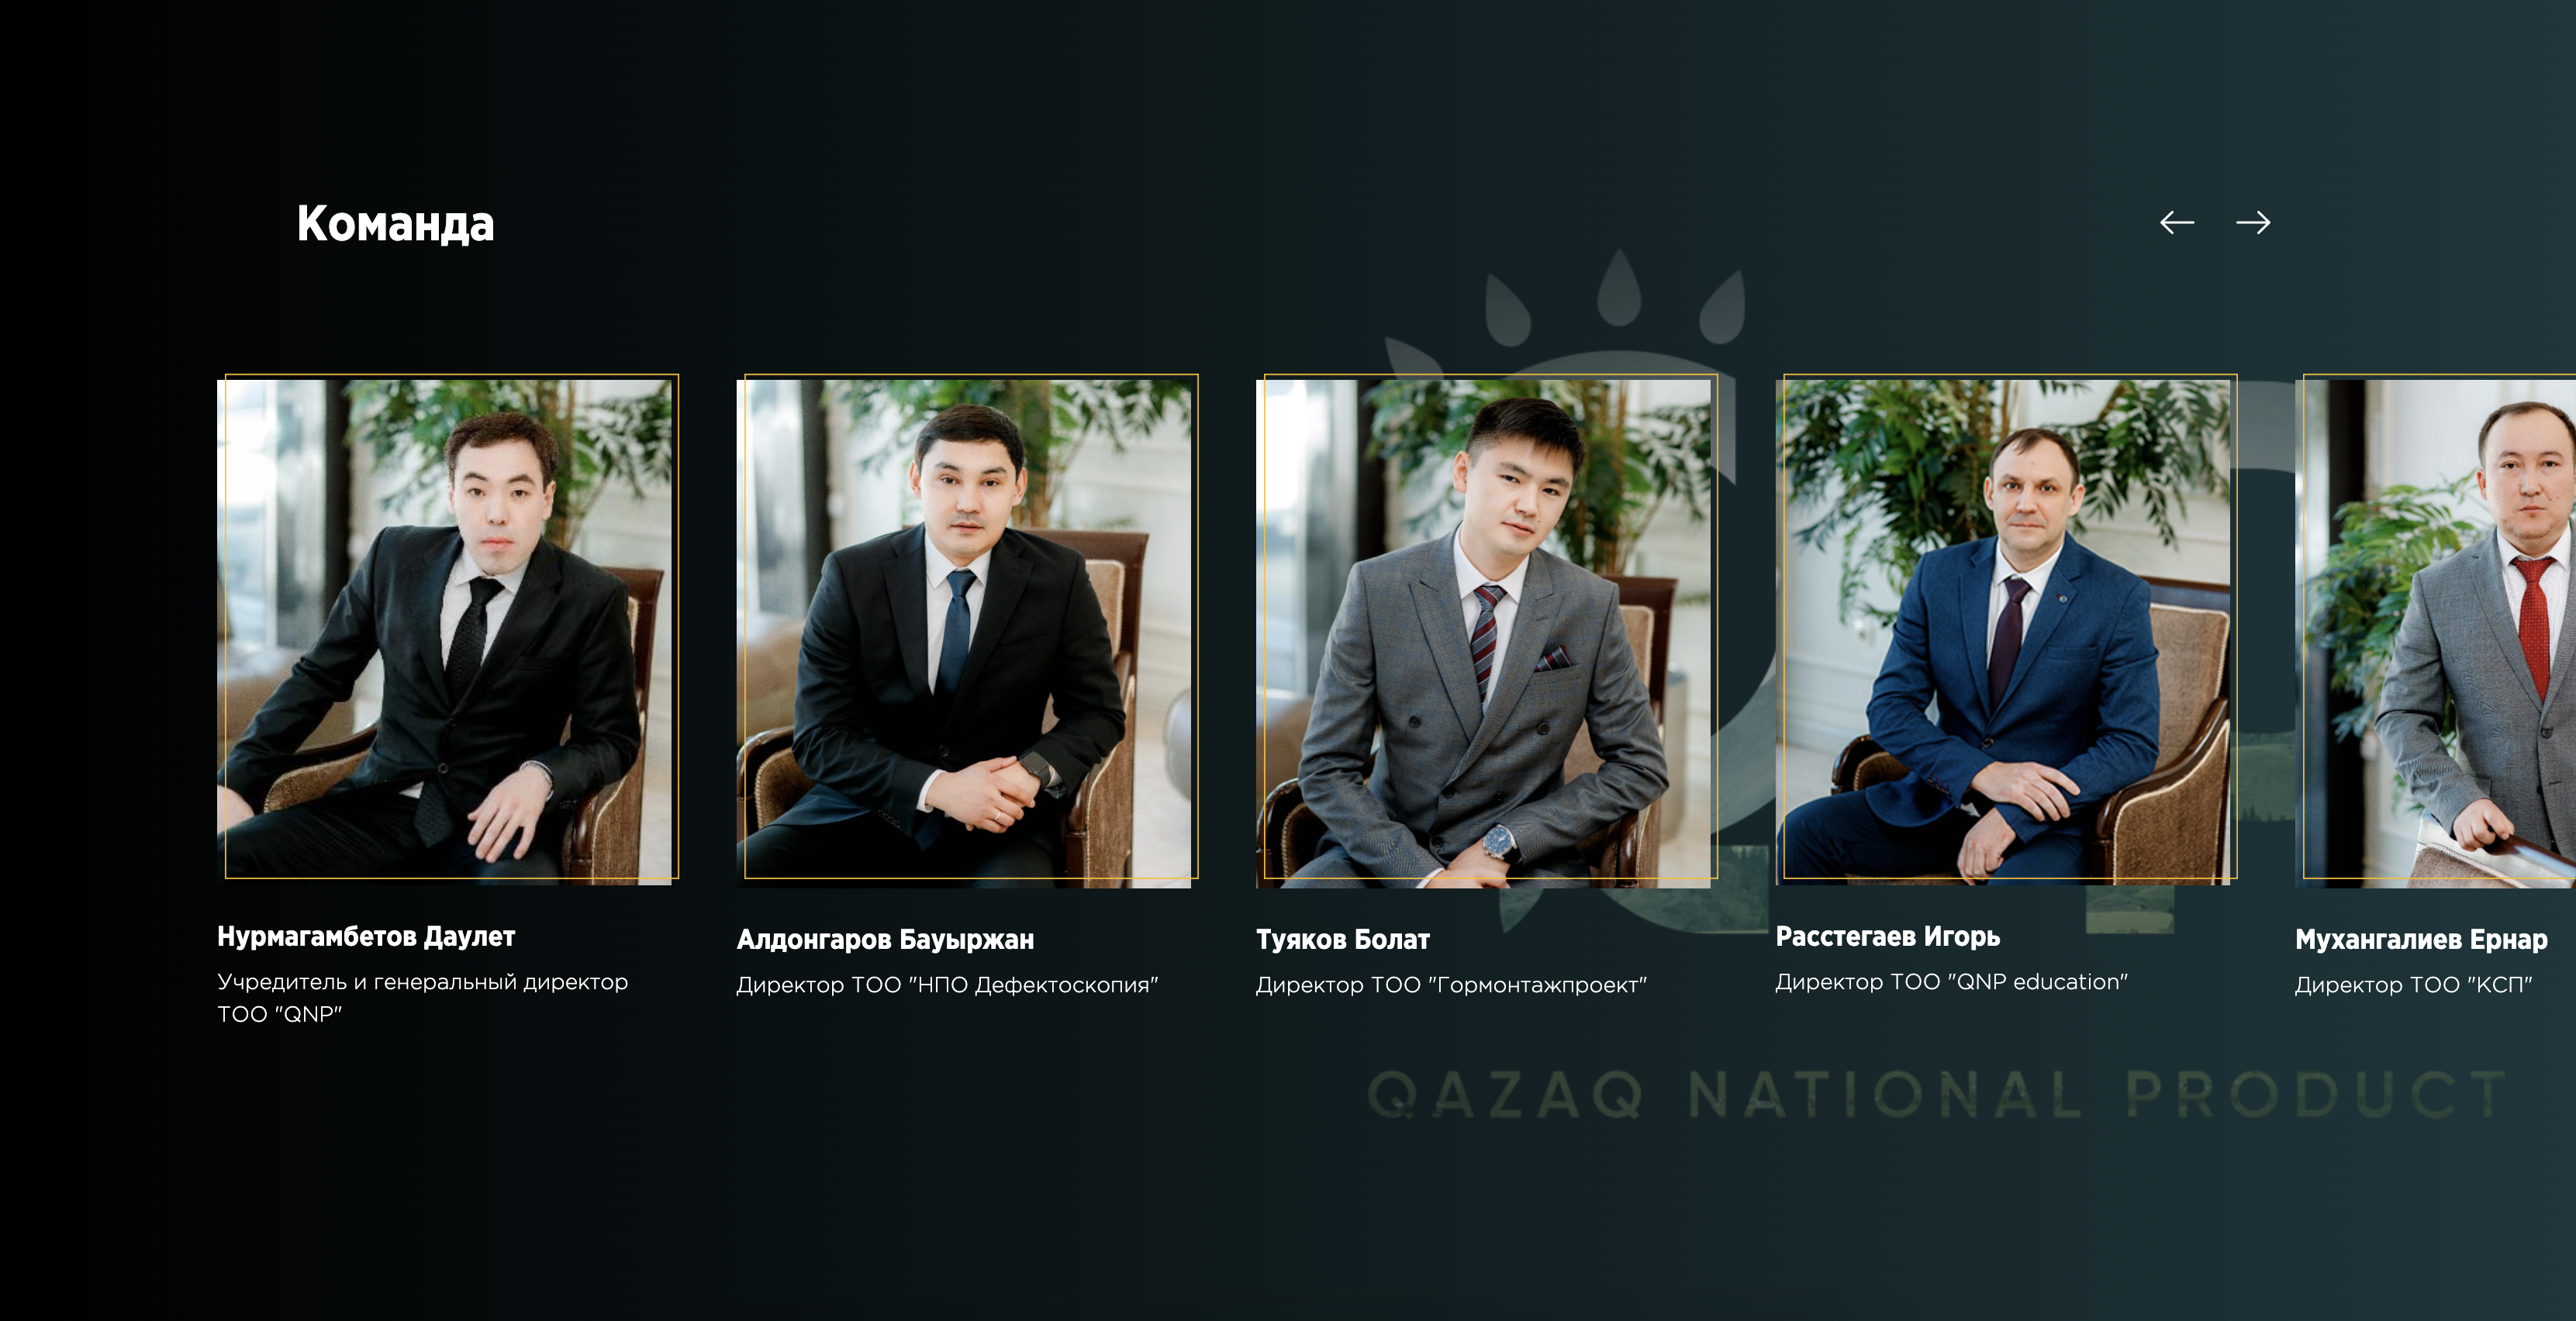 qazaq national product